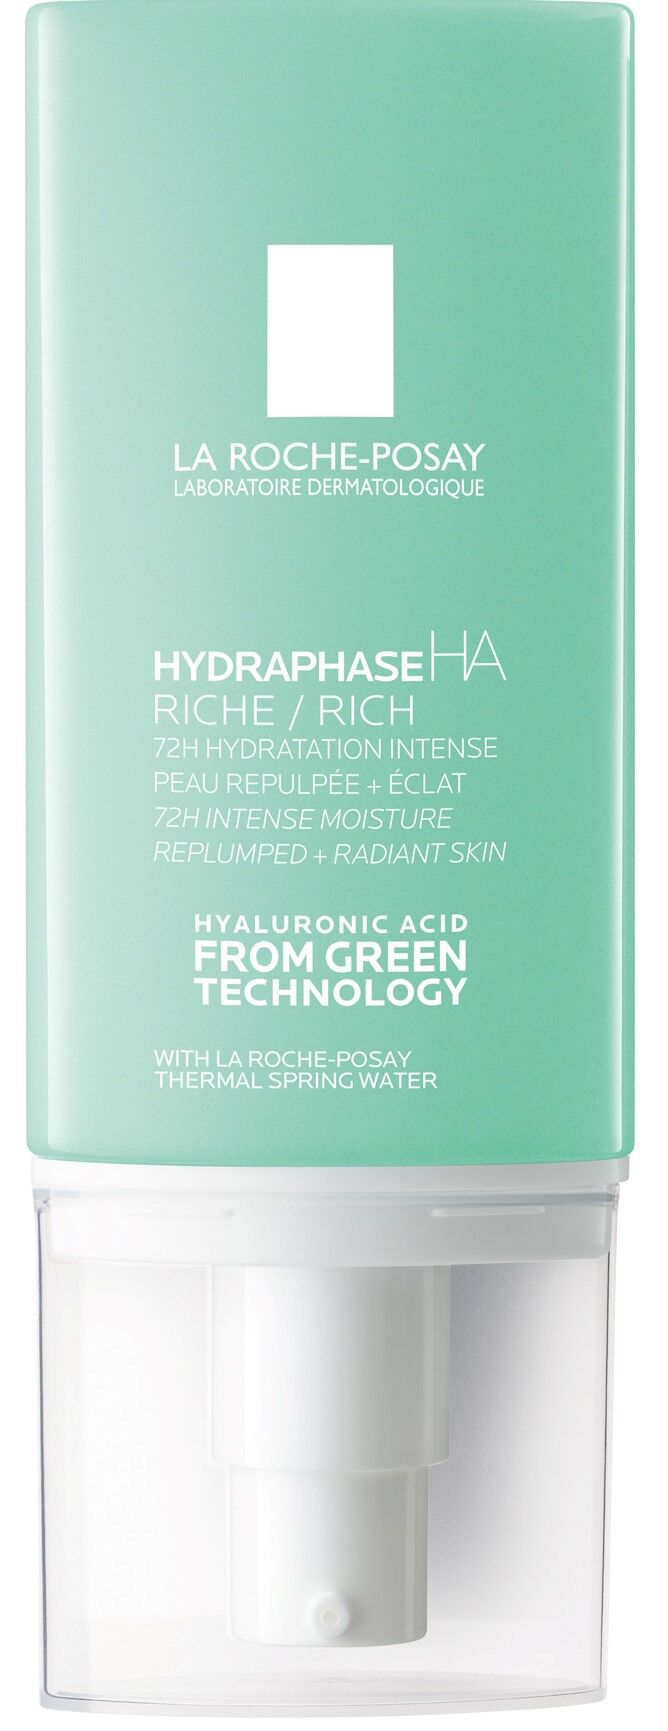 La Roche-Posay Hydraphase Cuidado hidratante rico e intenso para pieles secas 50mL